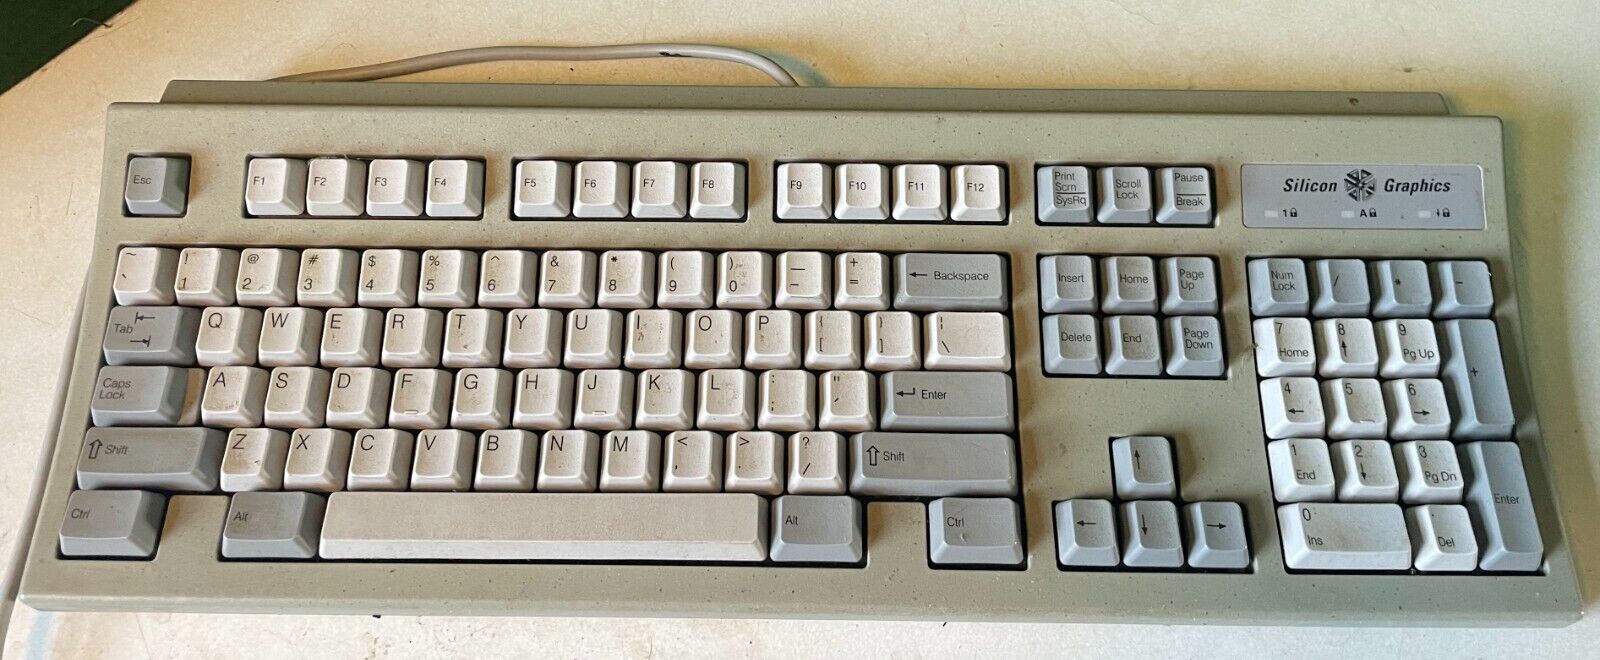 Vintage SGI Silicon Graphics RT6856T Keyboard, 062-0002-001,121472-101 B,Granite